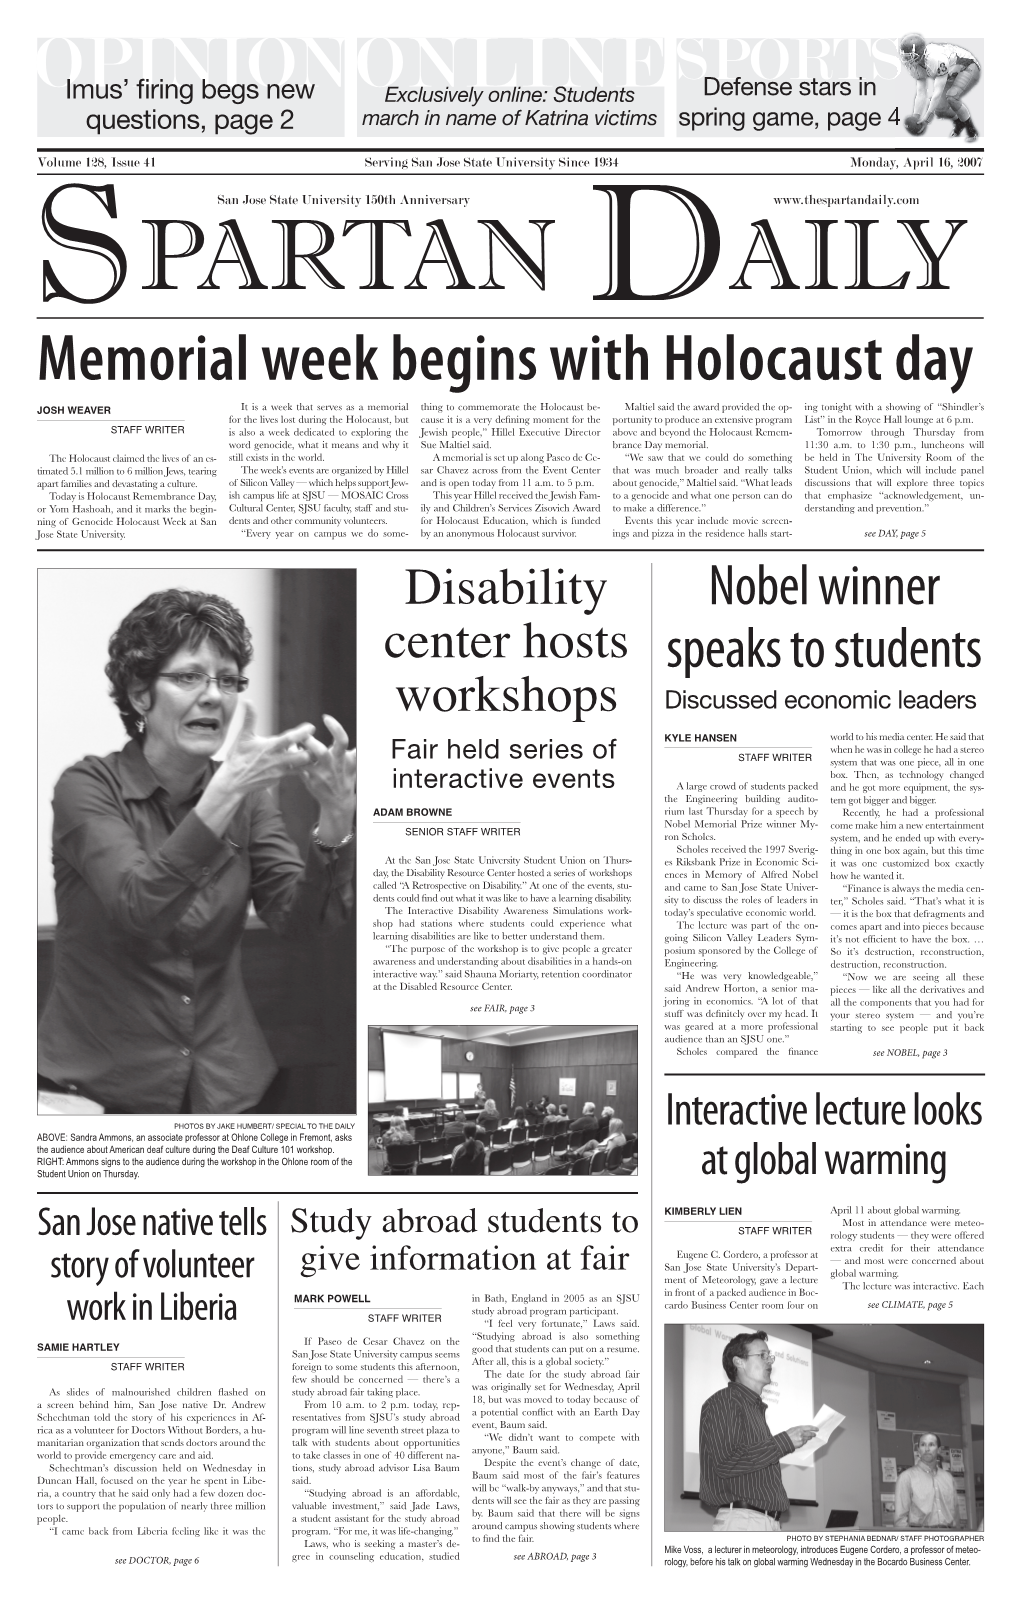 Memorial Week Begins with Holocaust Day